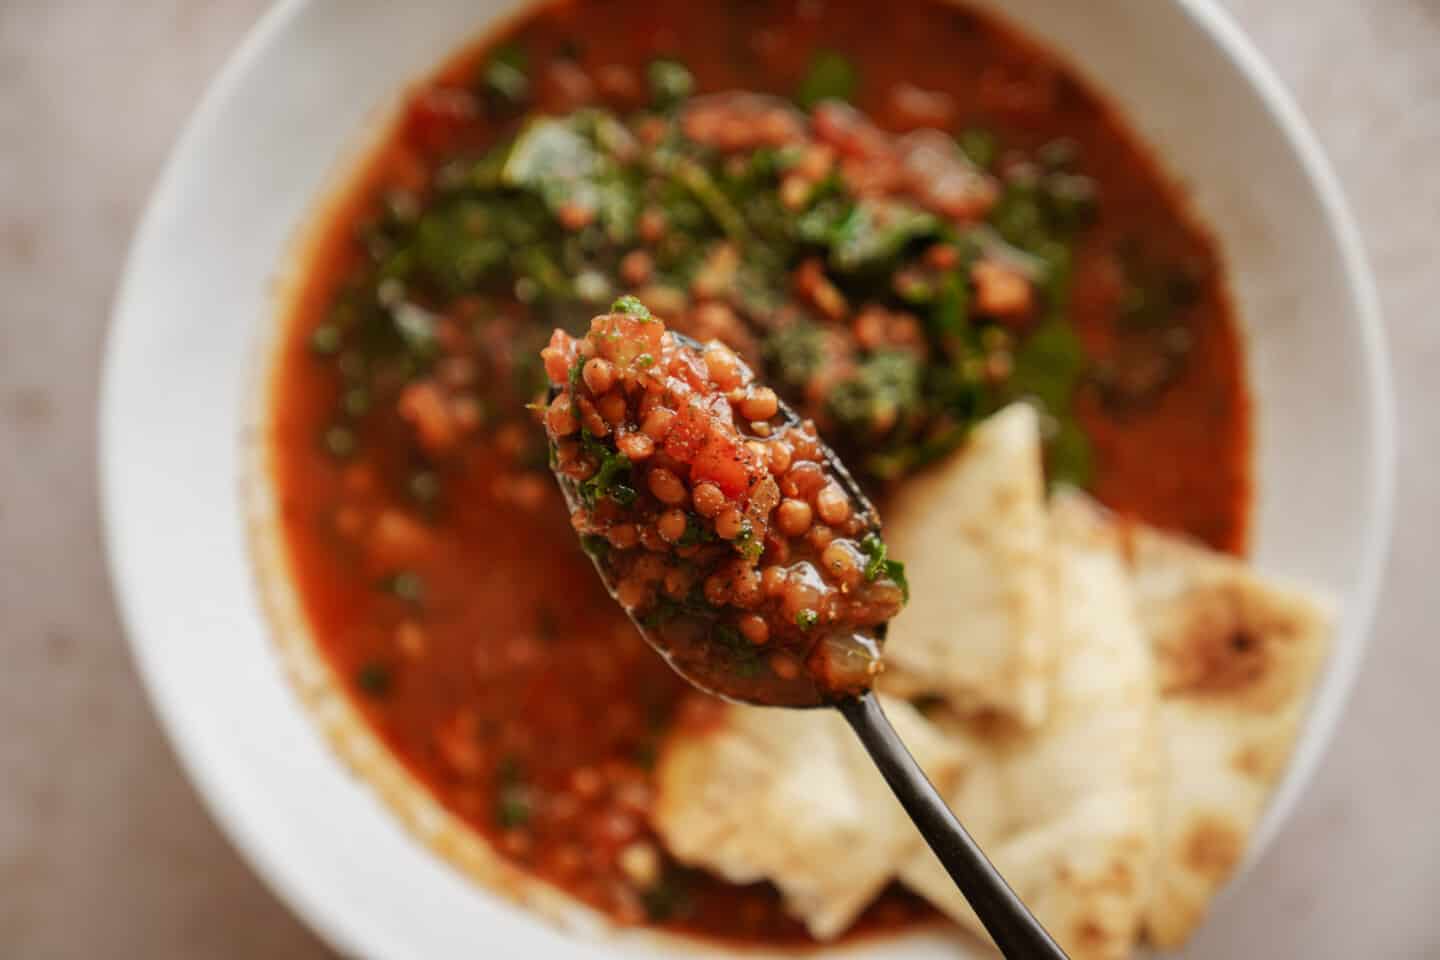 Spoonful of lentil stew